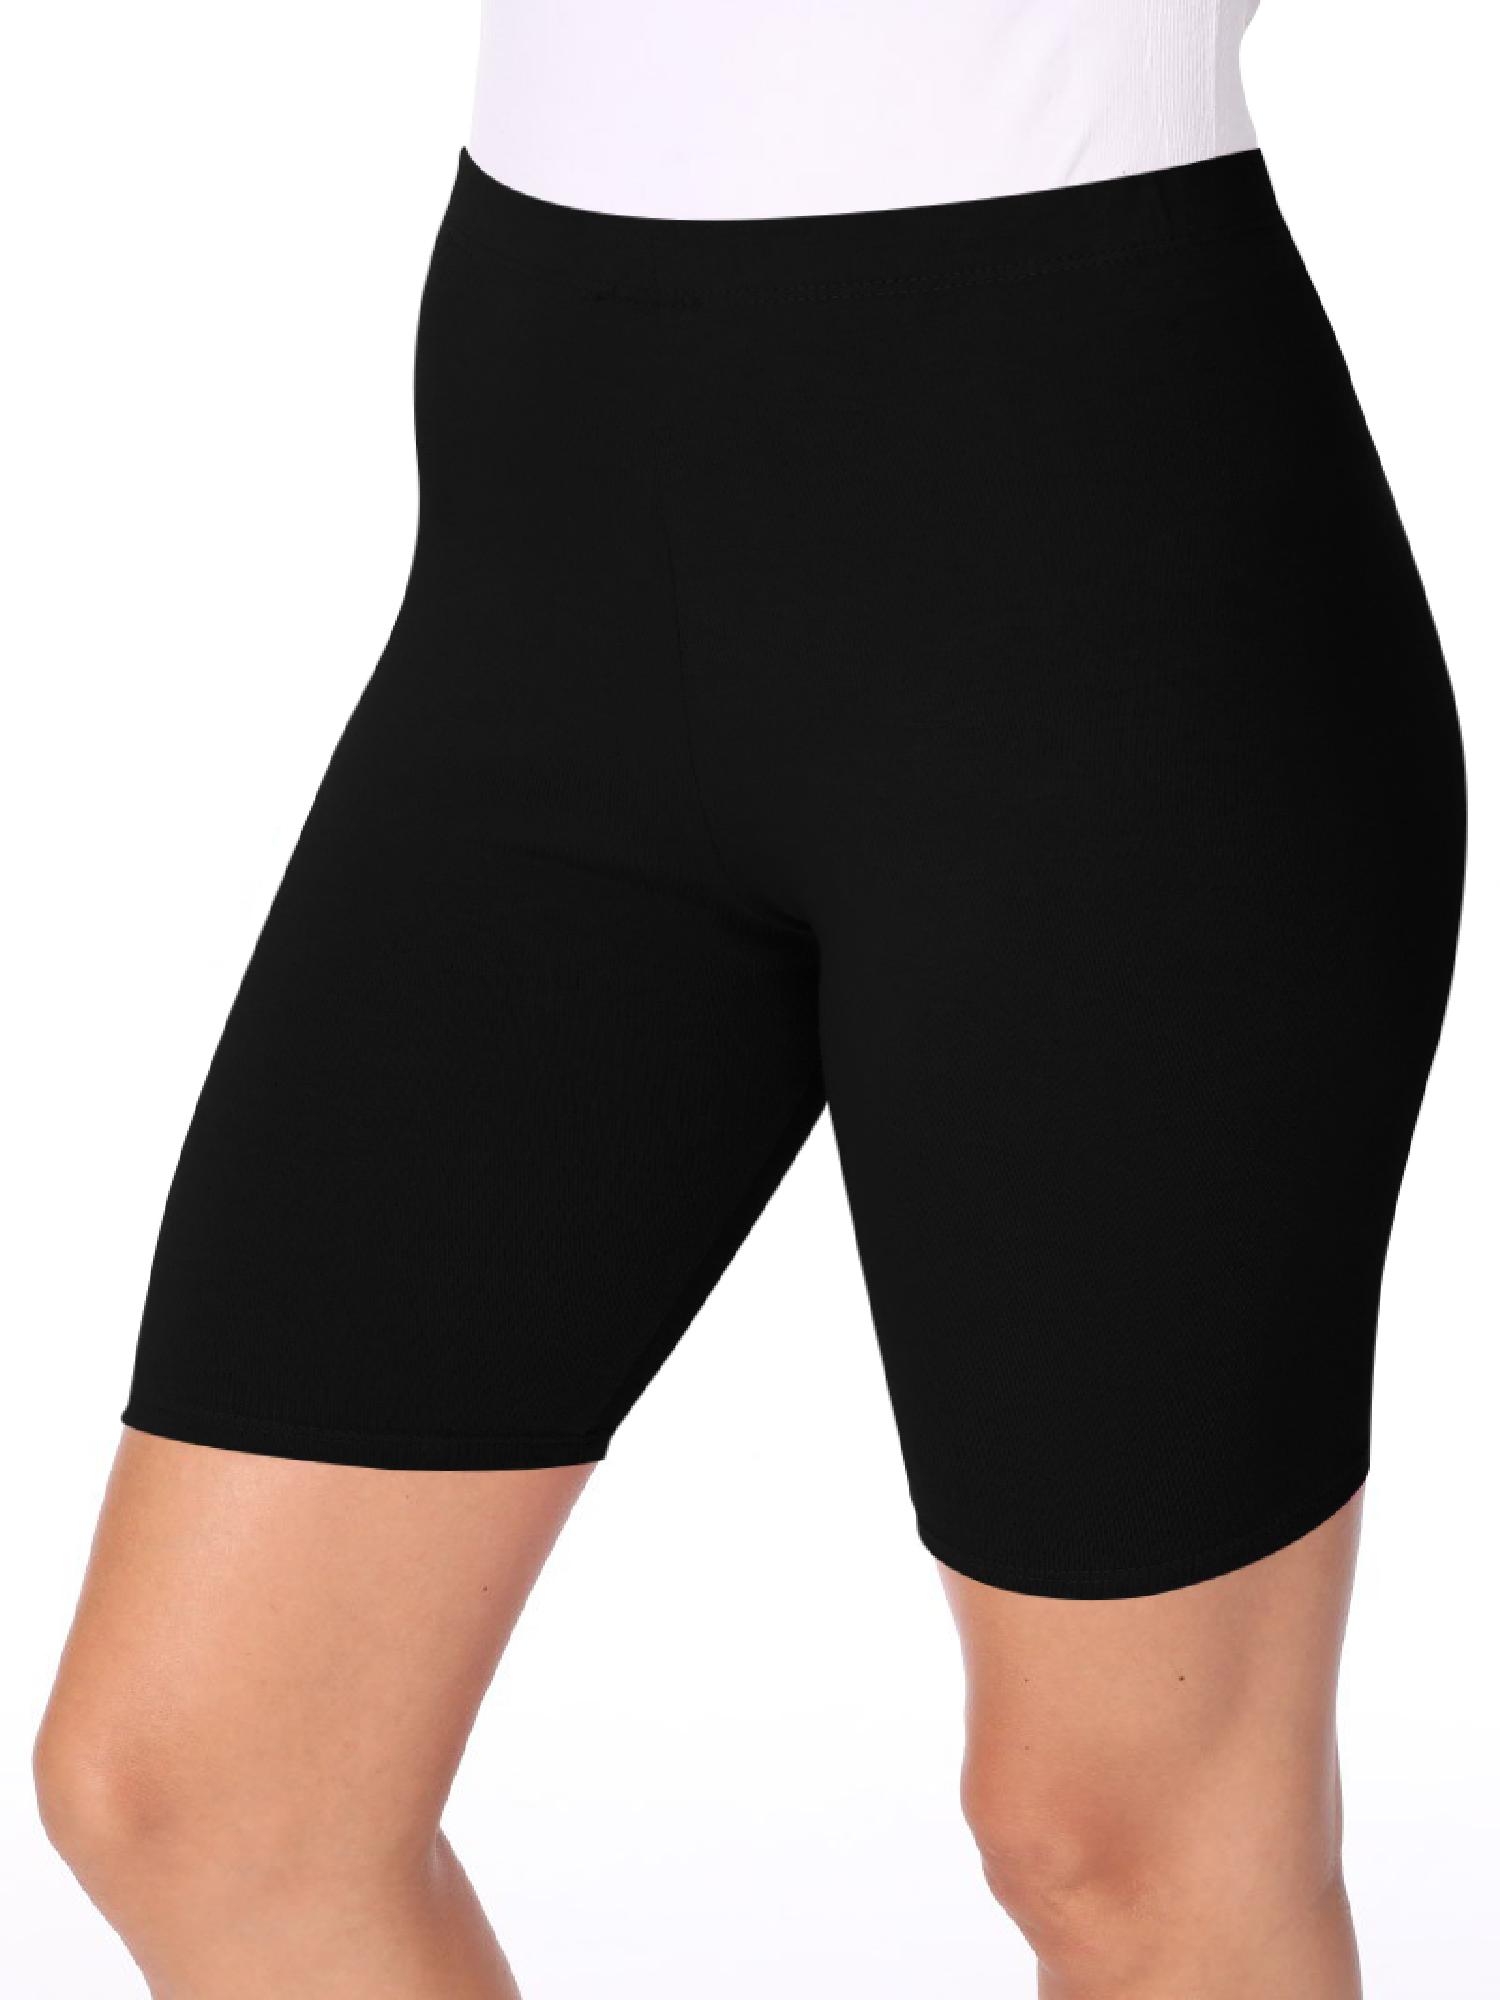 Women's Workout High Waist Comfy Elastic Band Solid Active Yoga Biker Shorts Pants S-3XL - image 5 of 5